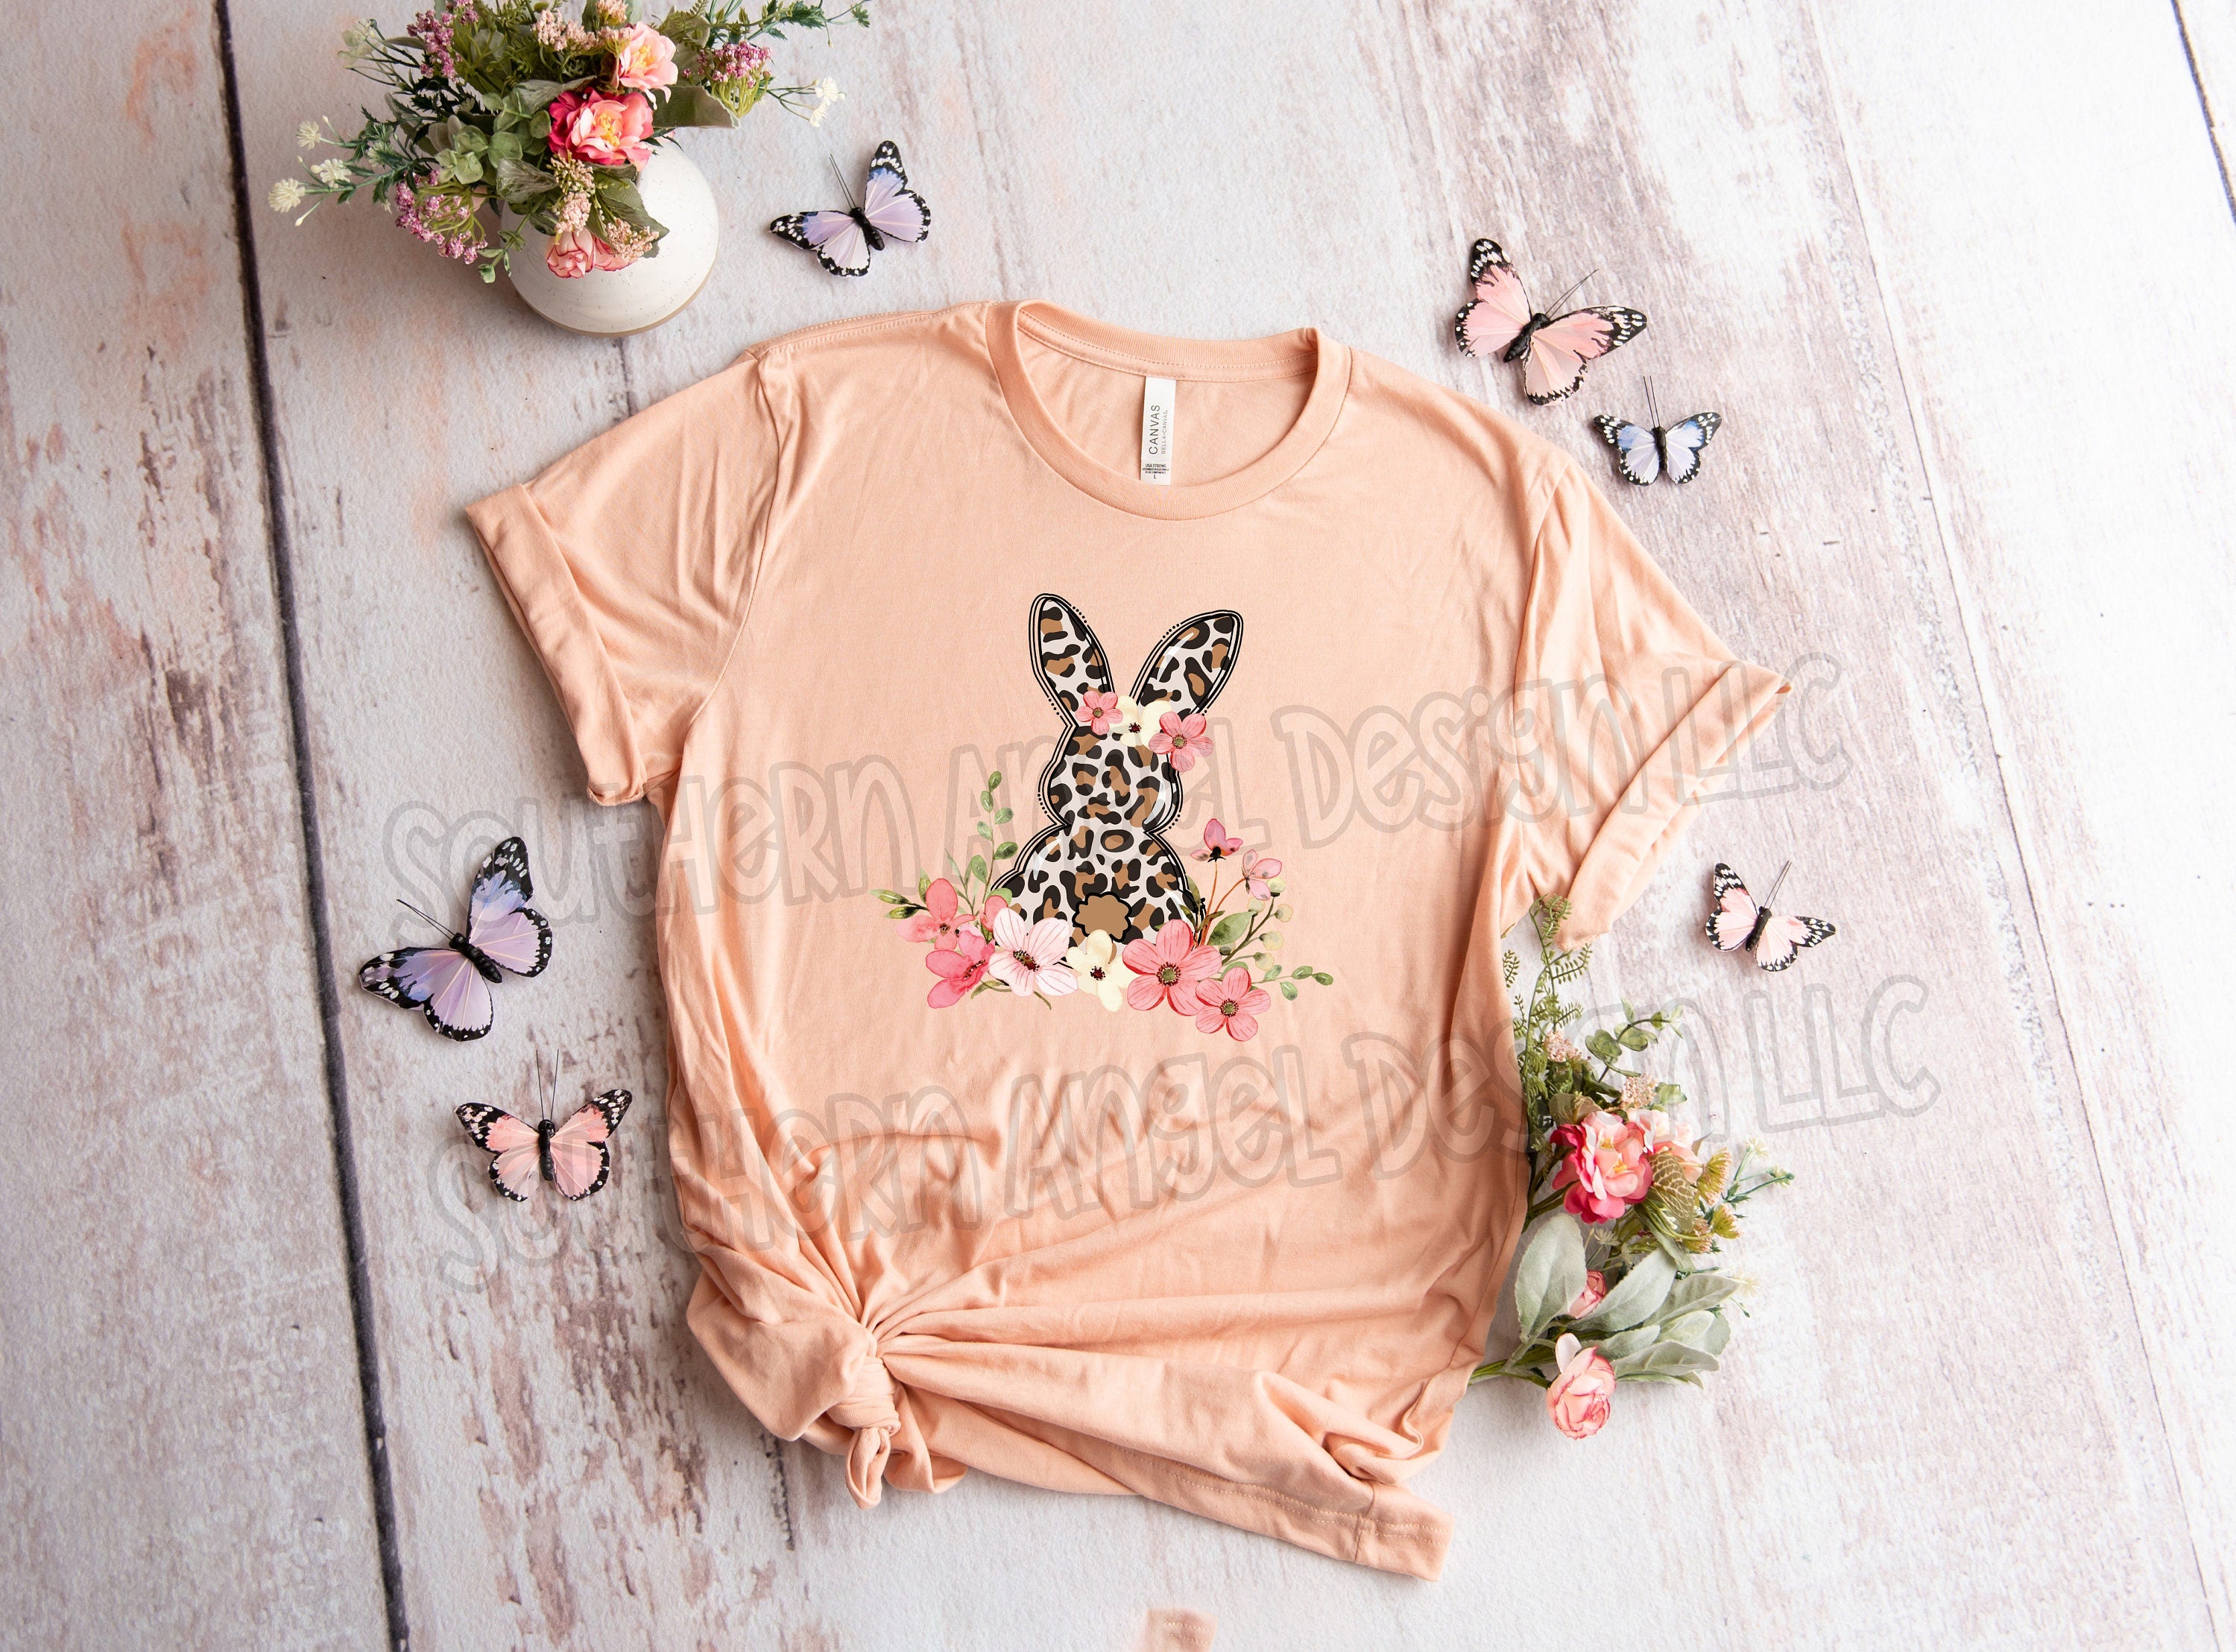 Floral bunny shirt, Easter shirt, Retro Easter shirt, He is risen shirt, Vintage Easter shirt, women’s Easter shirt, Religious shirt